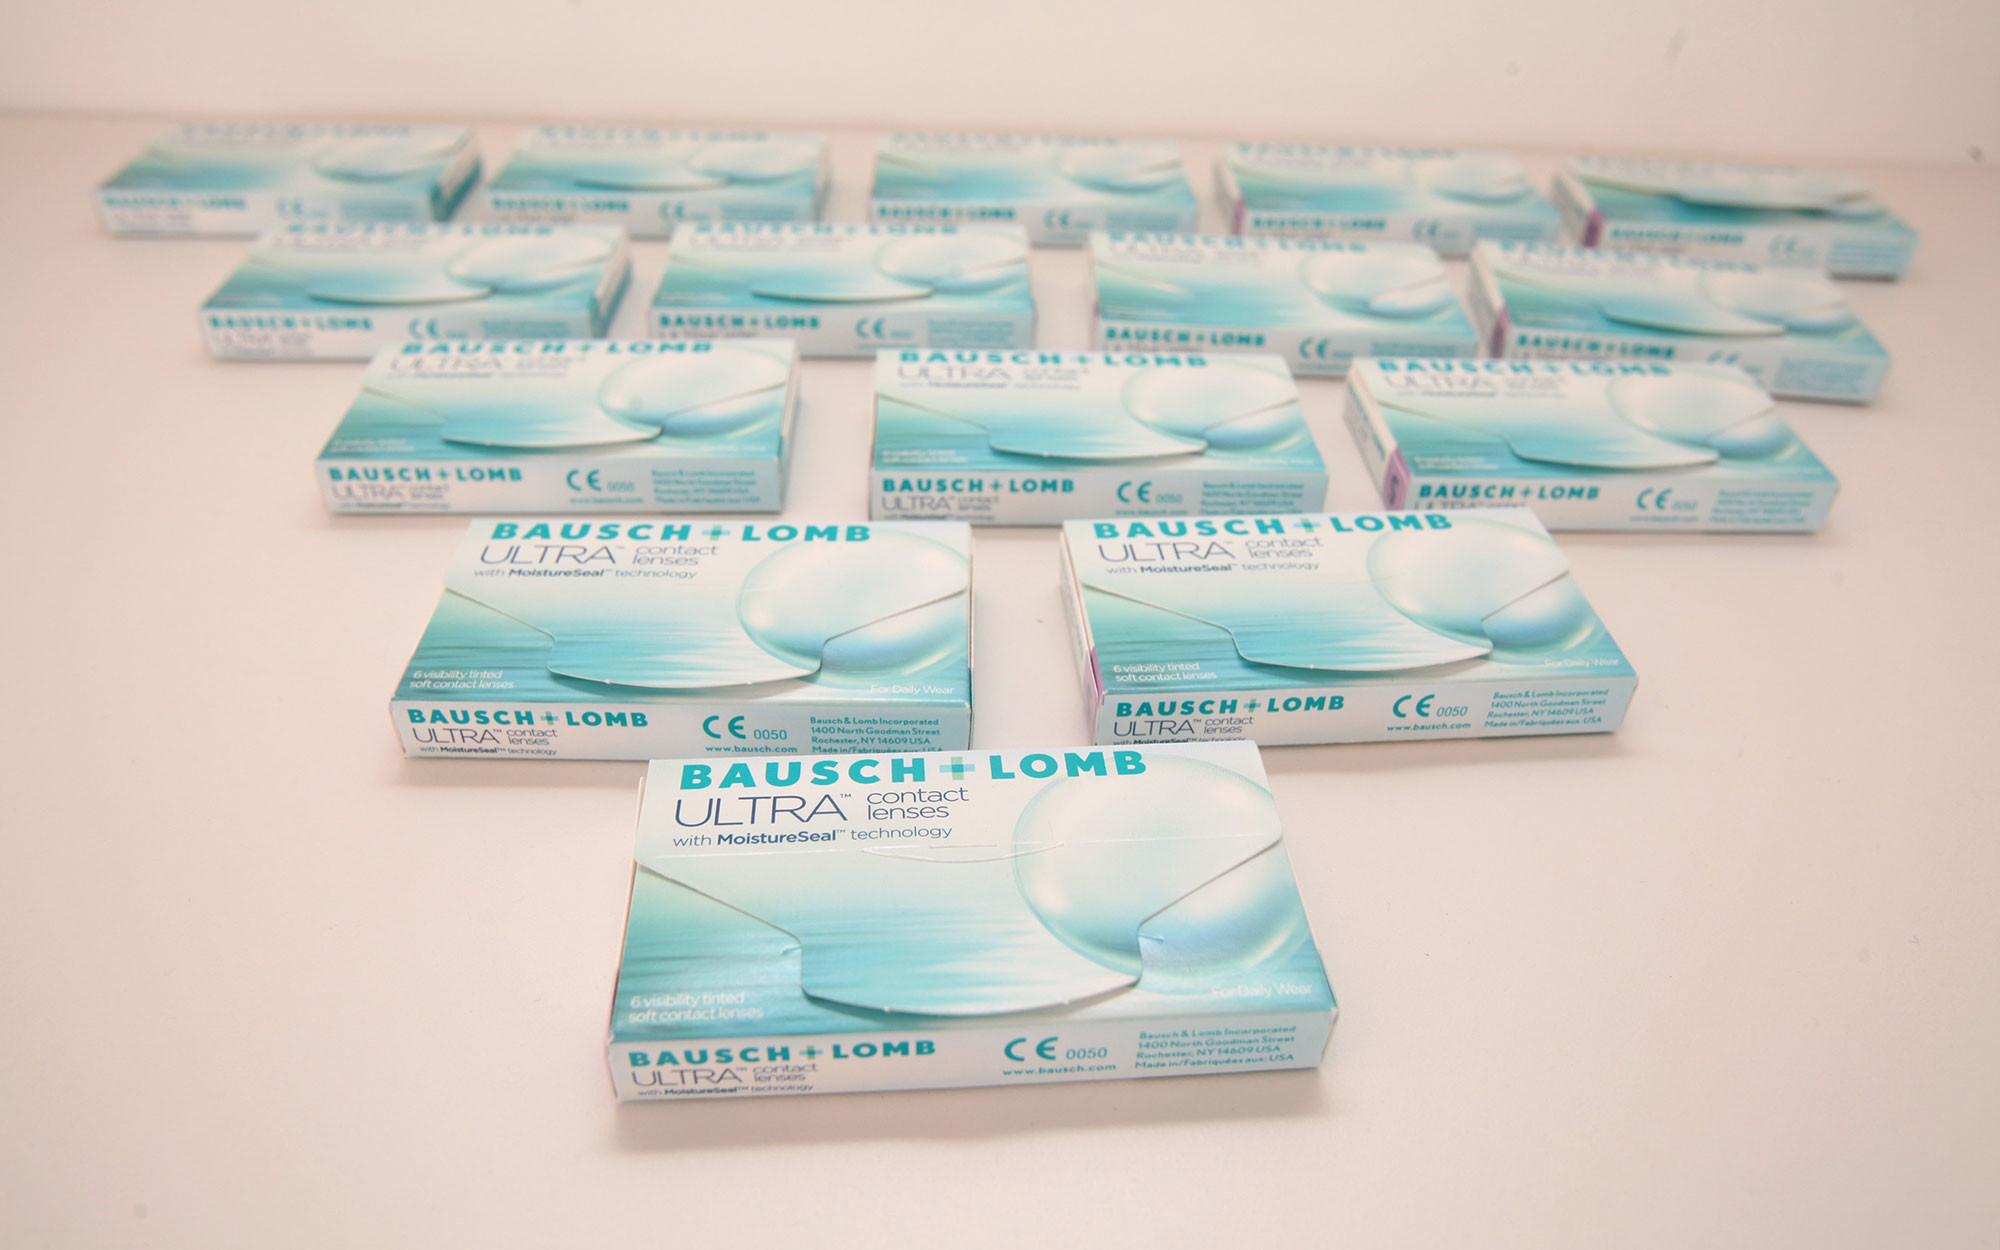 Упаковки контактных линз от Bausch & Lomb. Фото: © Hal Horowitz/Invision for Bausch + Lomb/AP Images